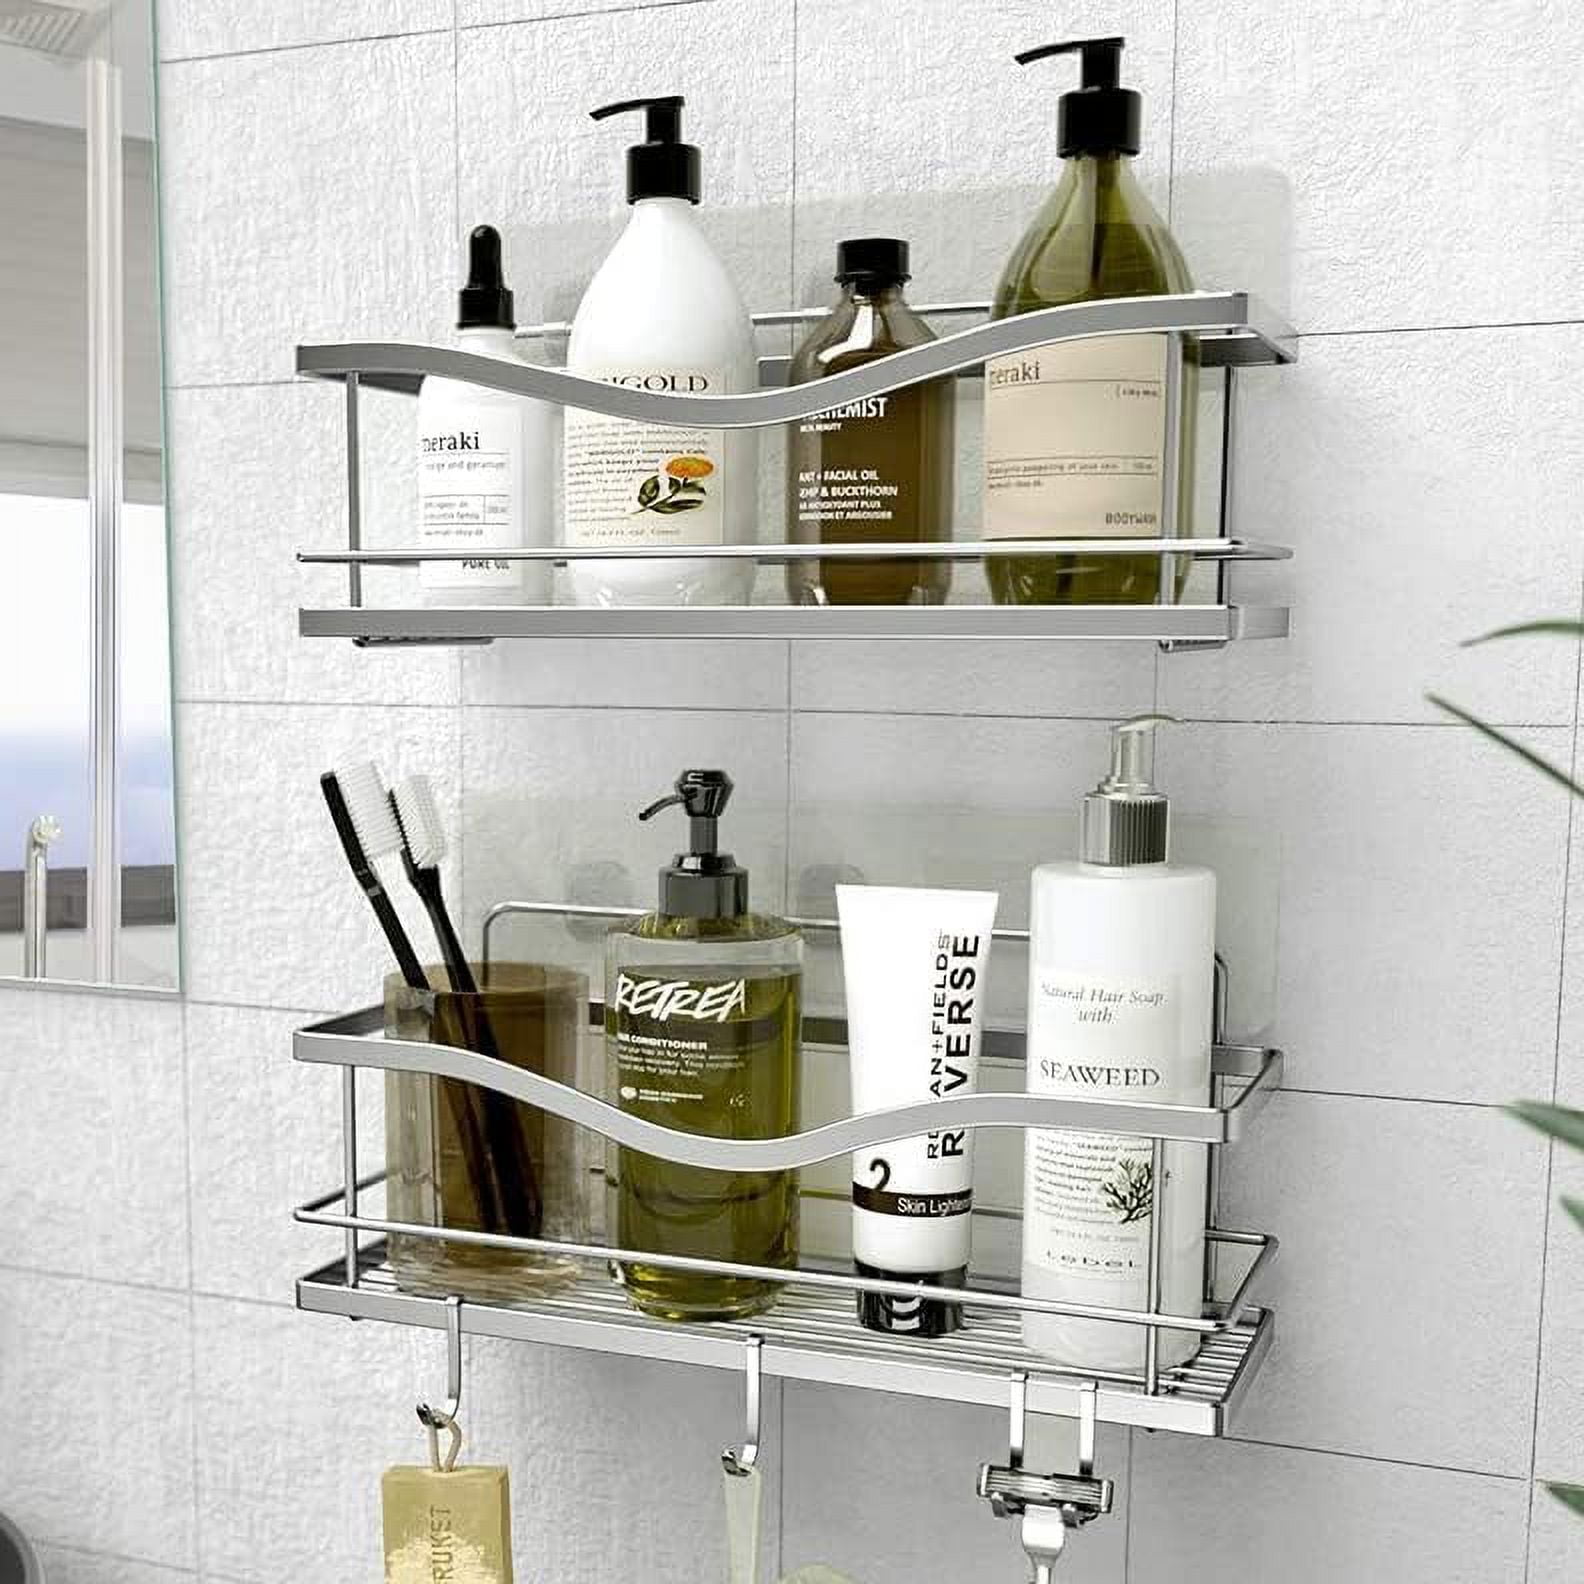 KINCMAX Shower Caddy Basket Shelf with Hooks, Caddy Organizer Wall